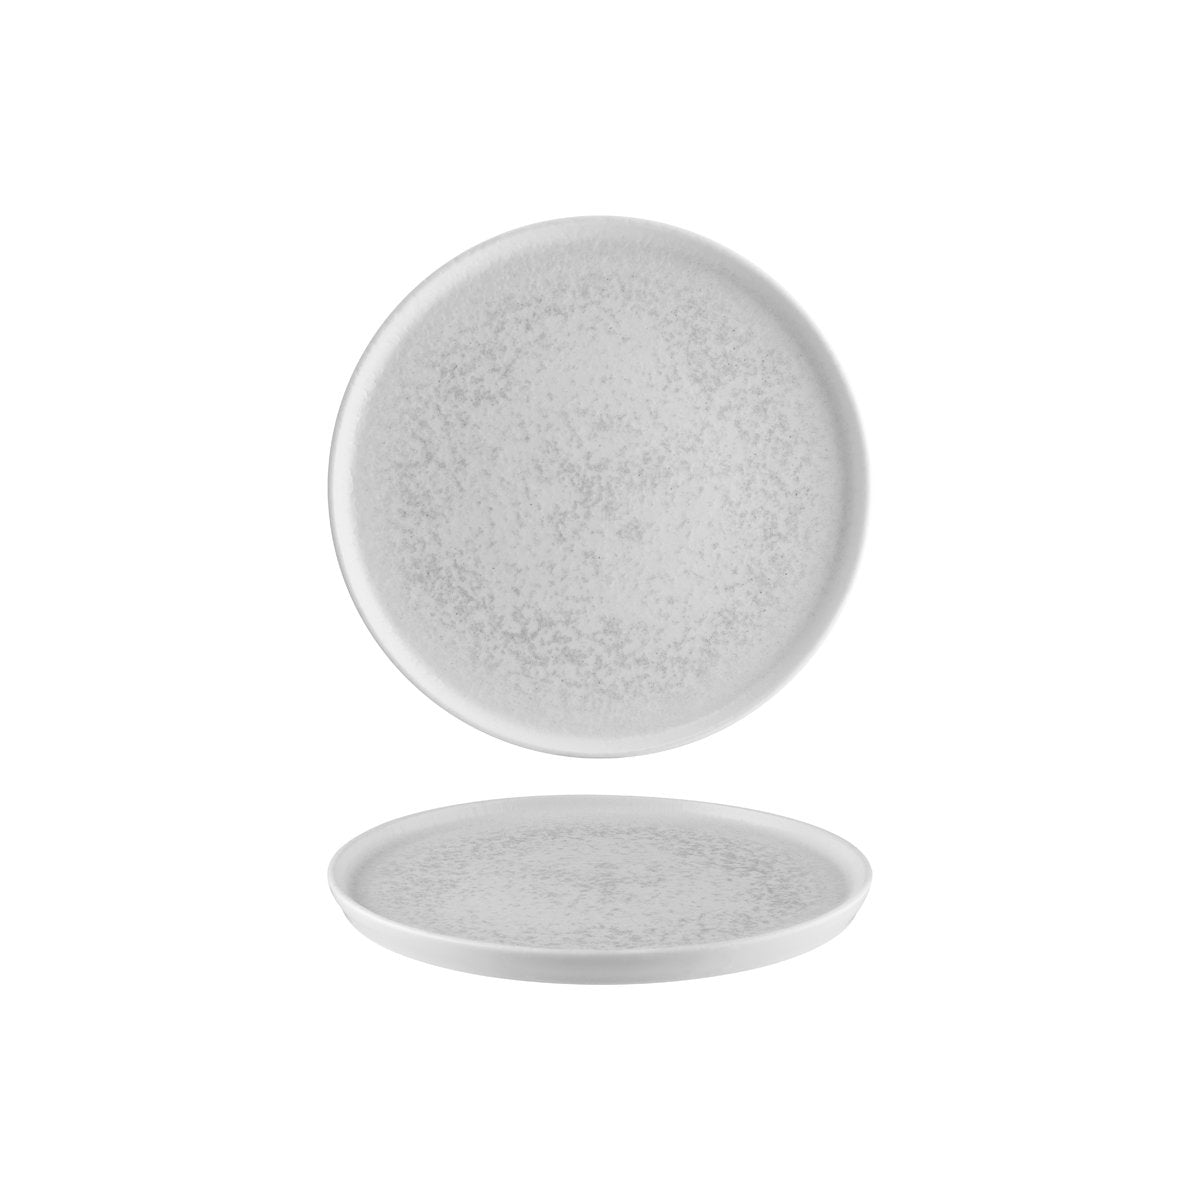 130212 Bonna Lunar White Round Plate 220x17mm Tomkin Australia Hospitality Supplies